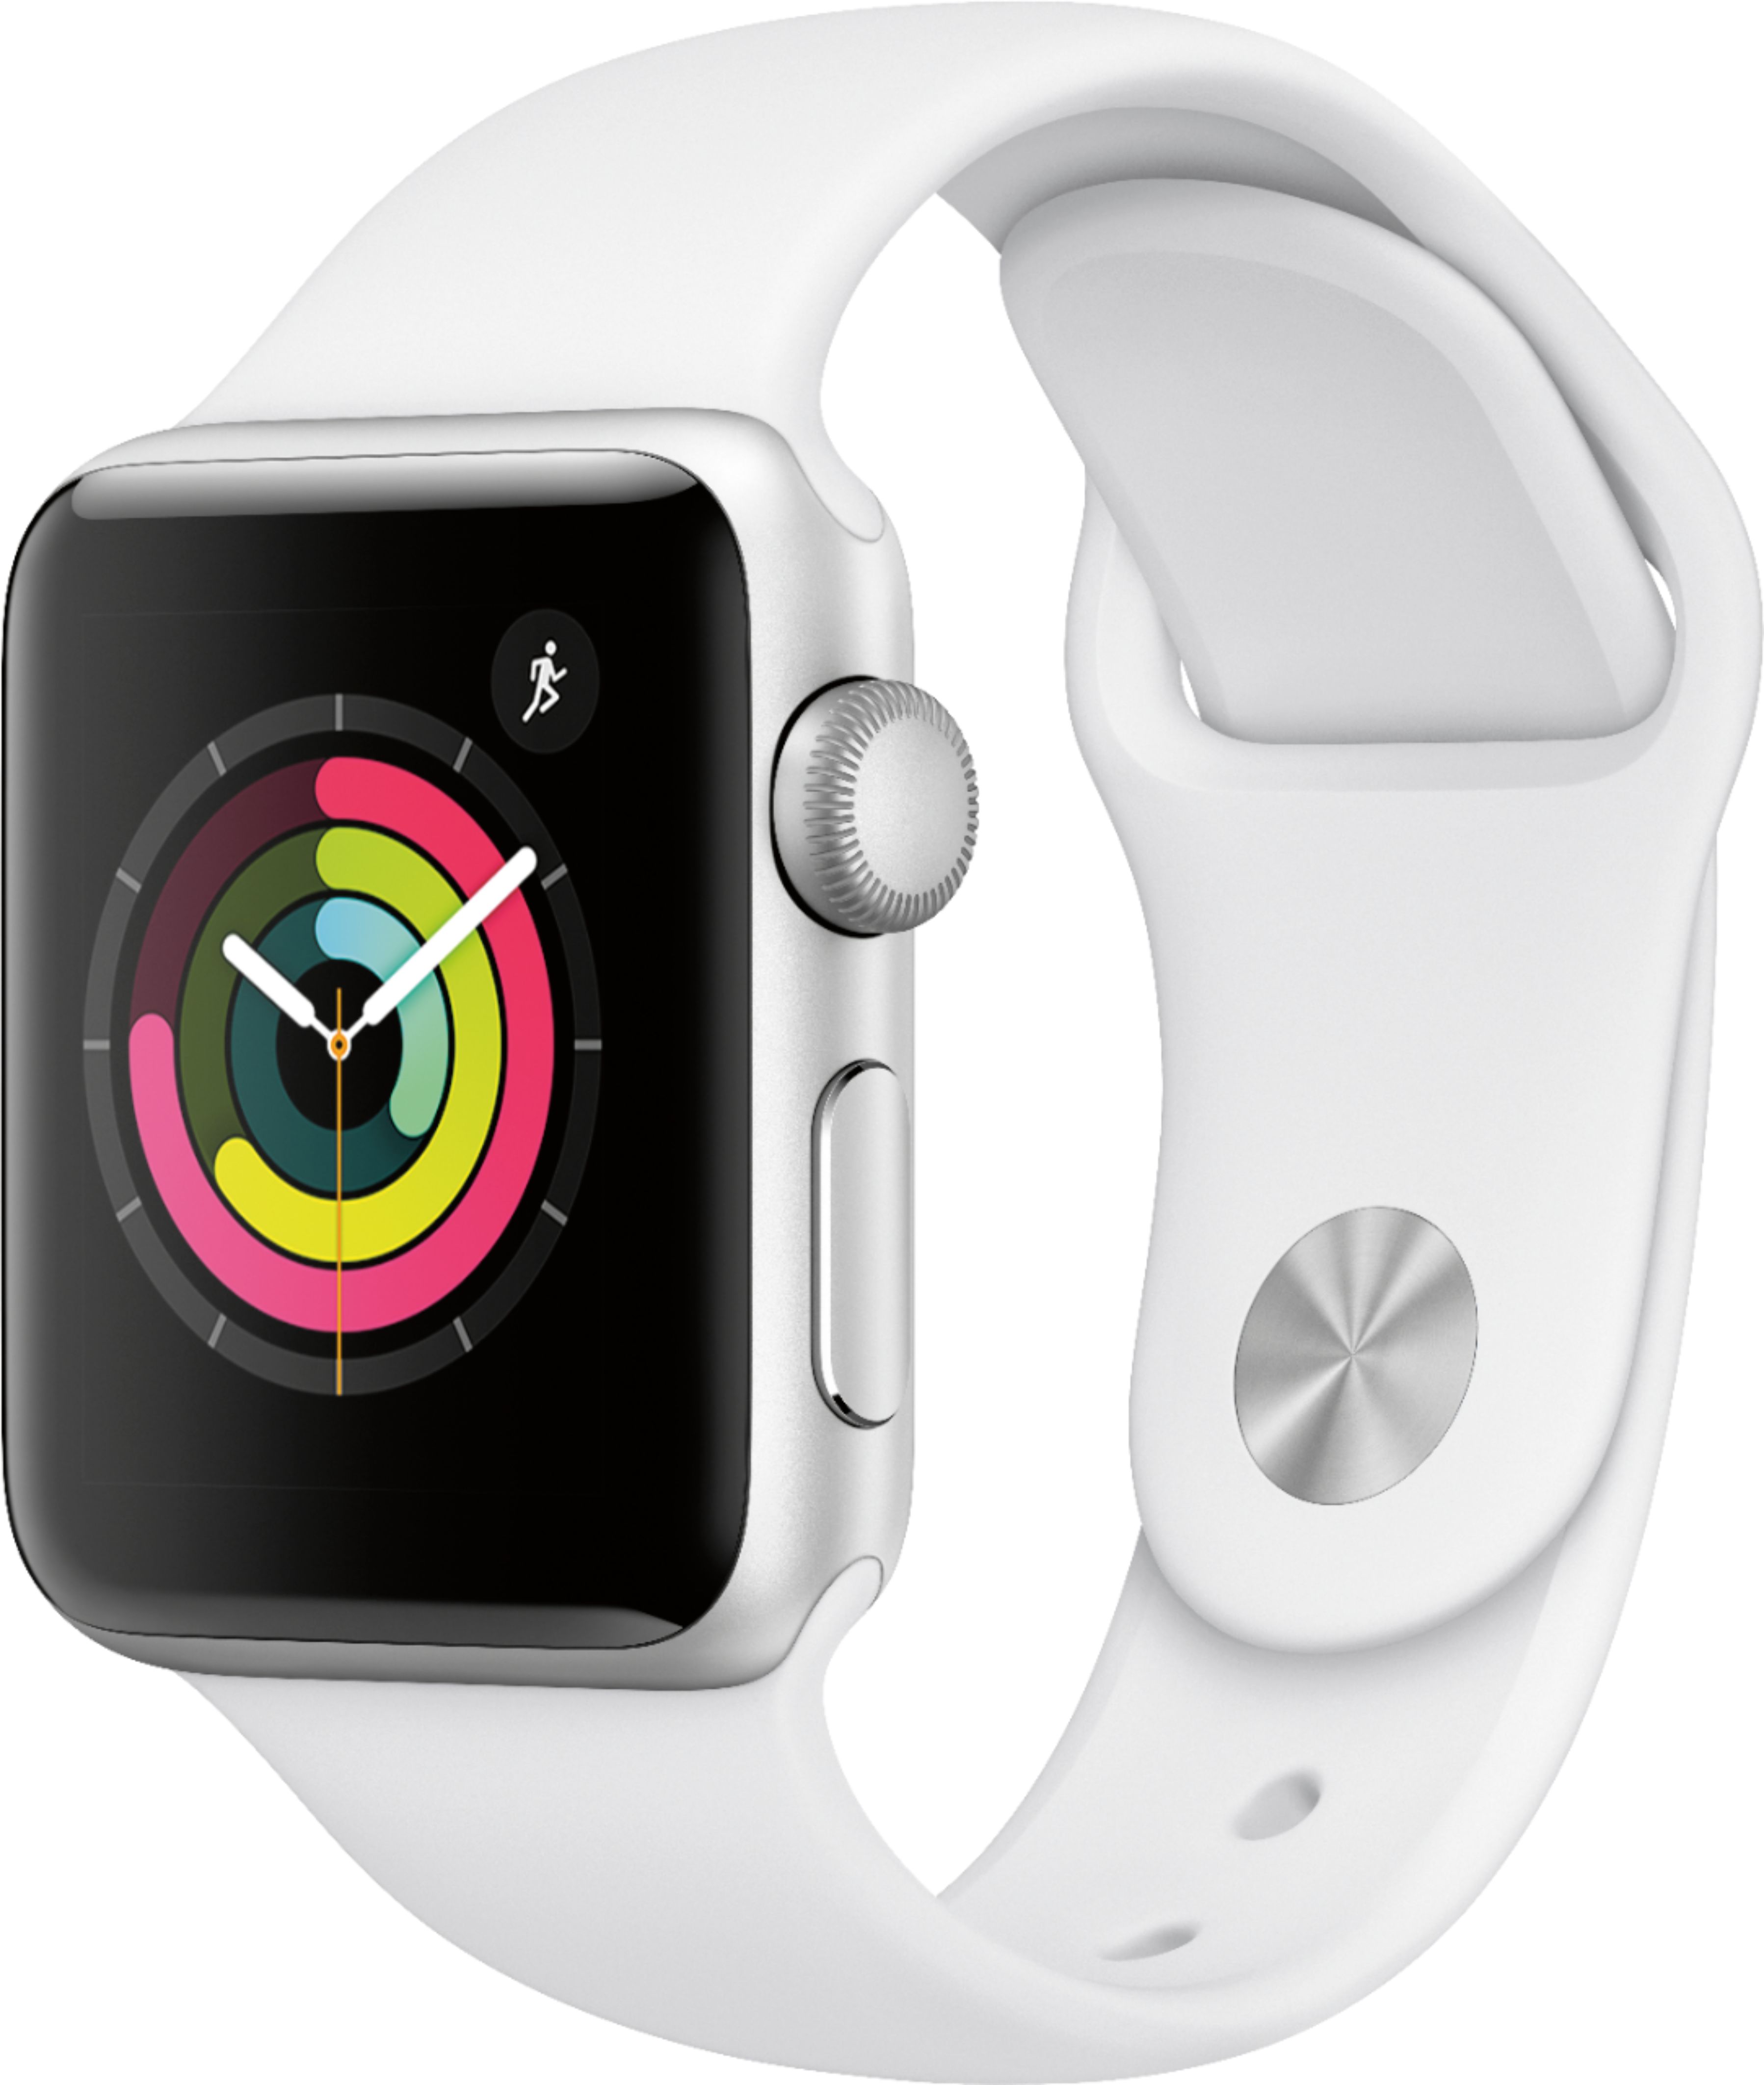 Apple Watch Series 2 Have Gps Top Sellers, 53% OFF | www 